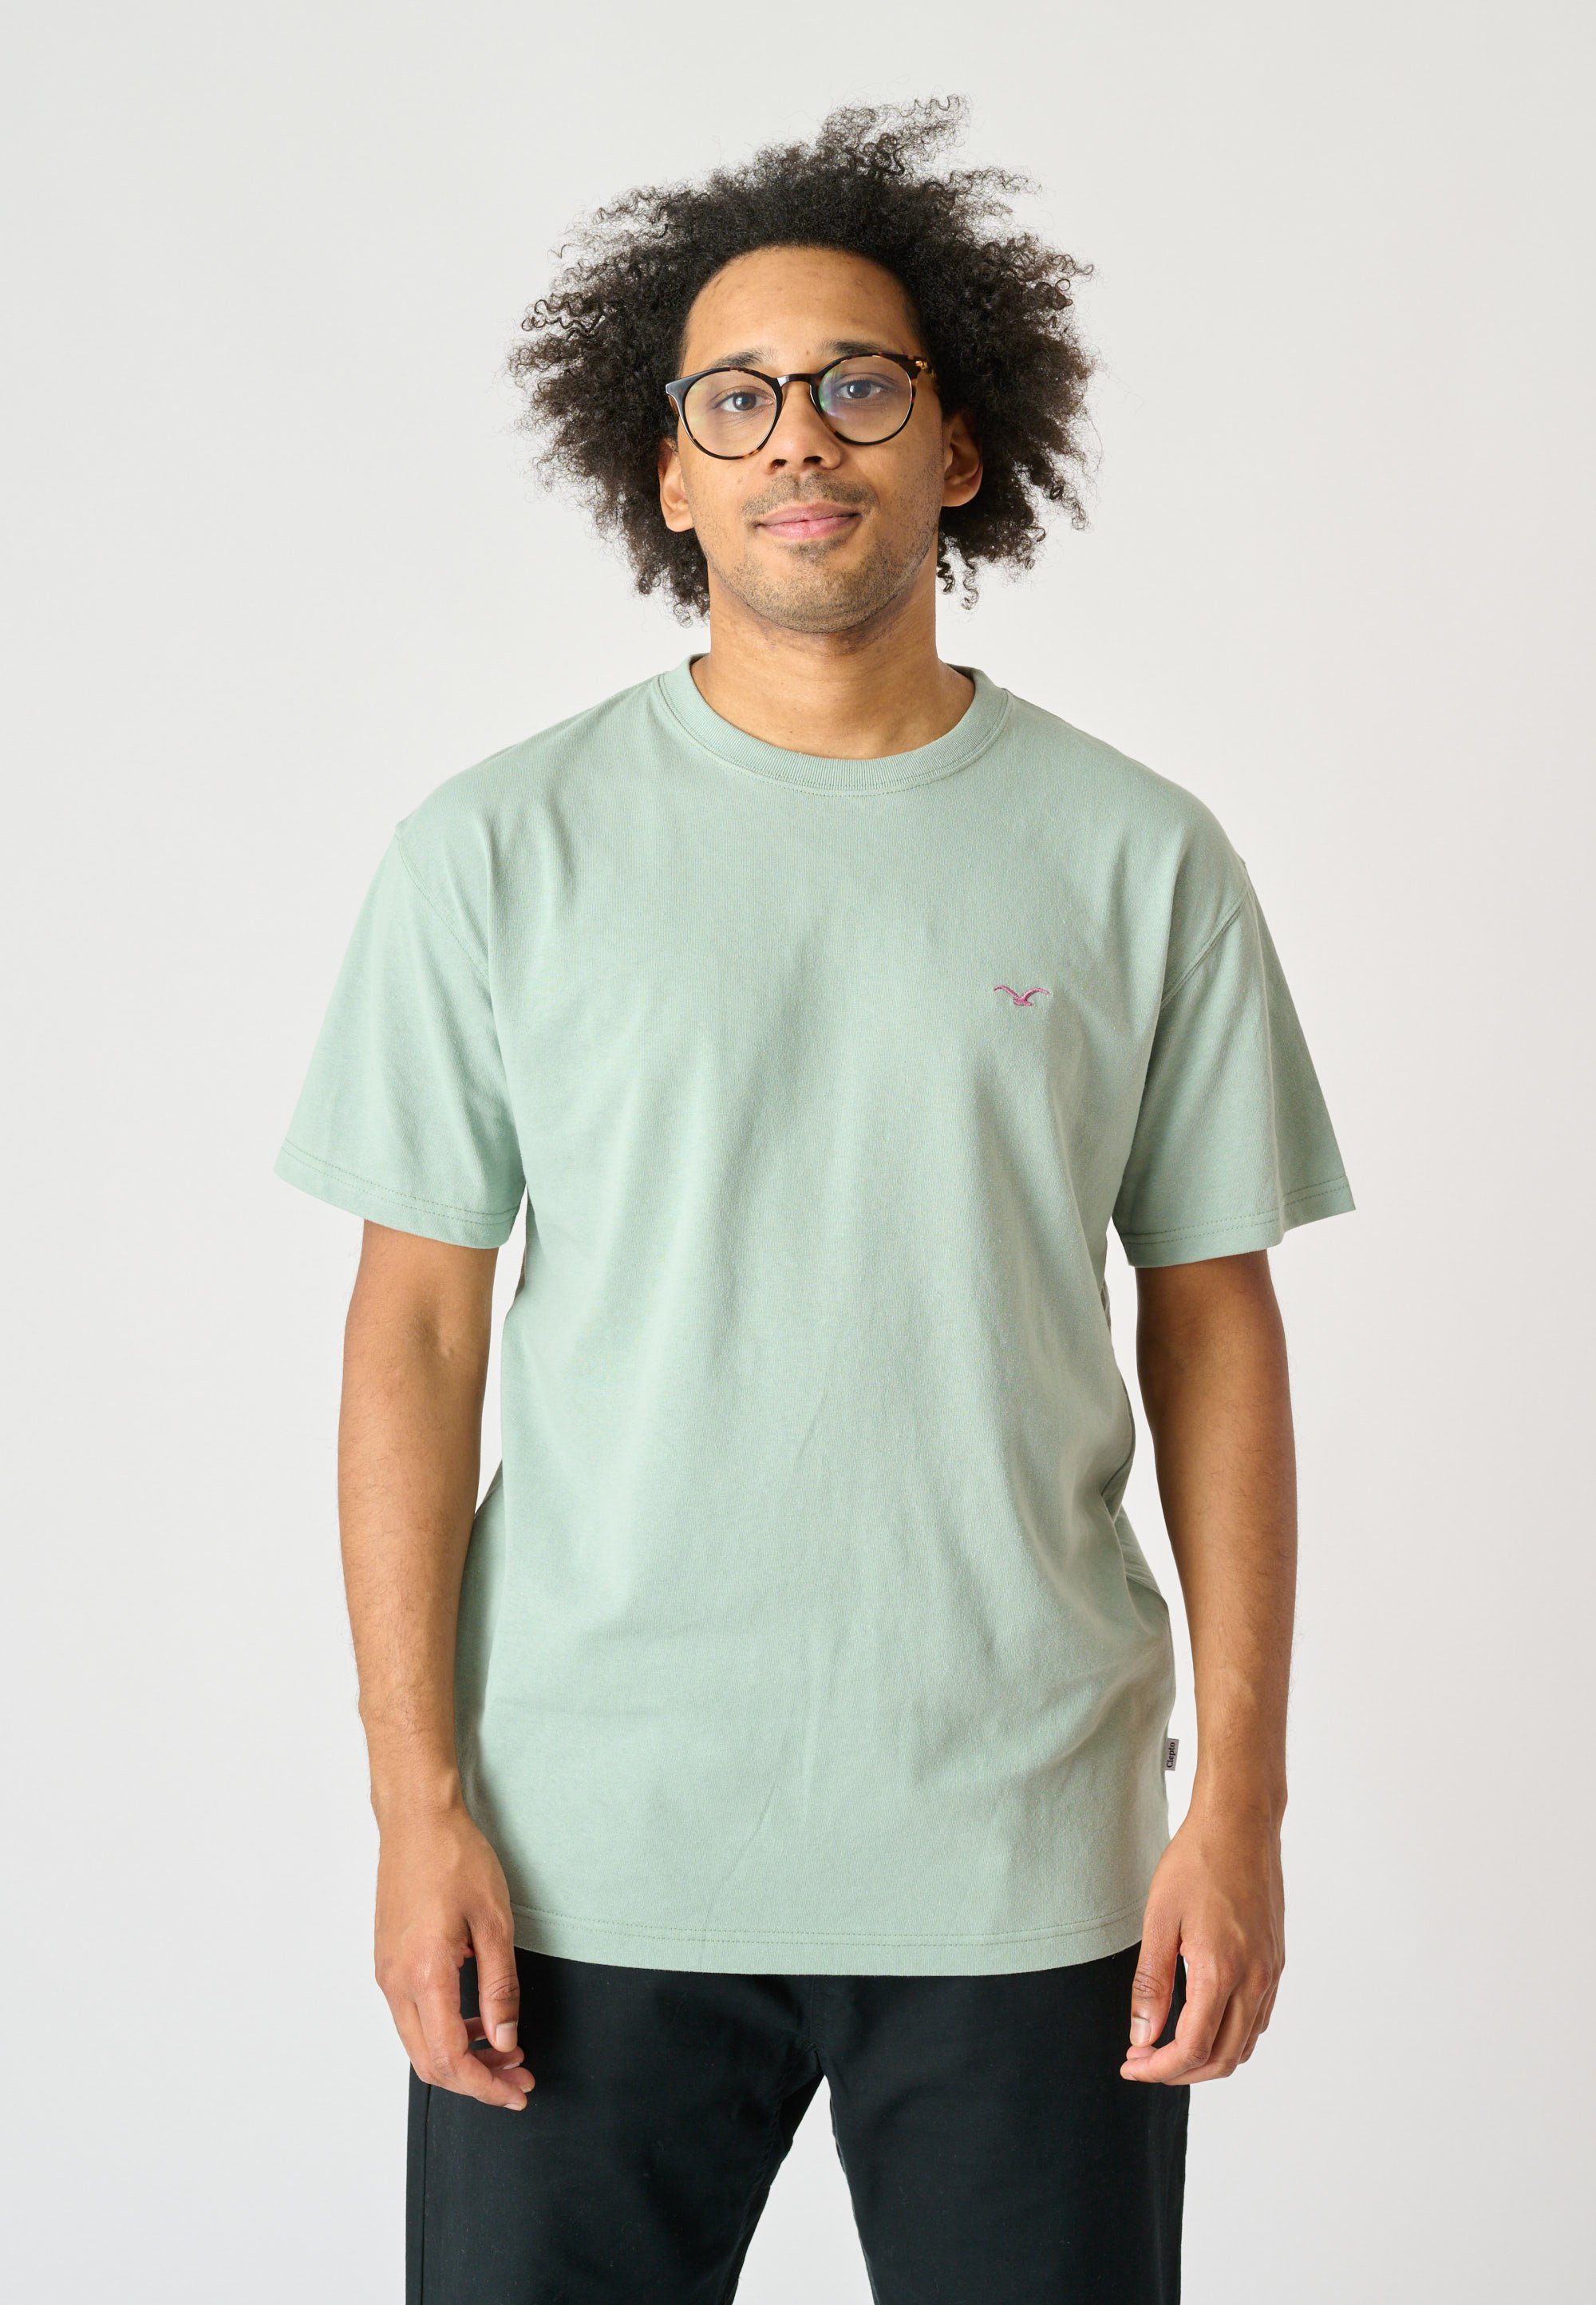 schlichtem Boxy Design T-Shirt in Cleptomanicx 2 Ligull hellgrün